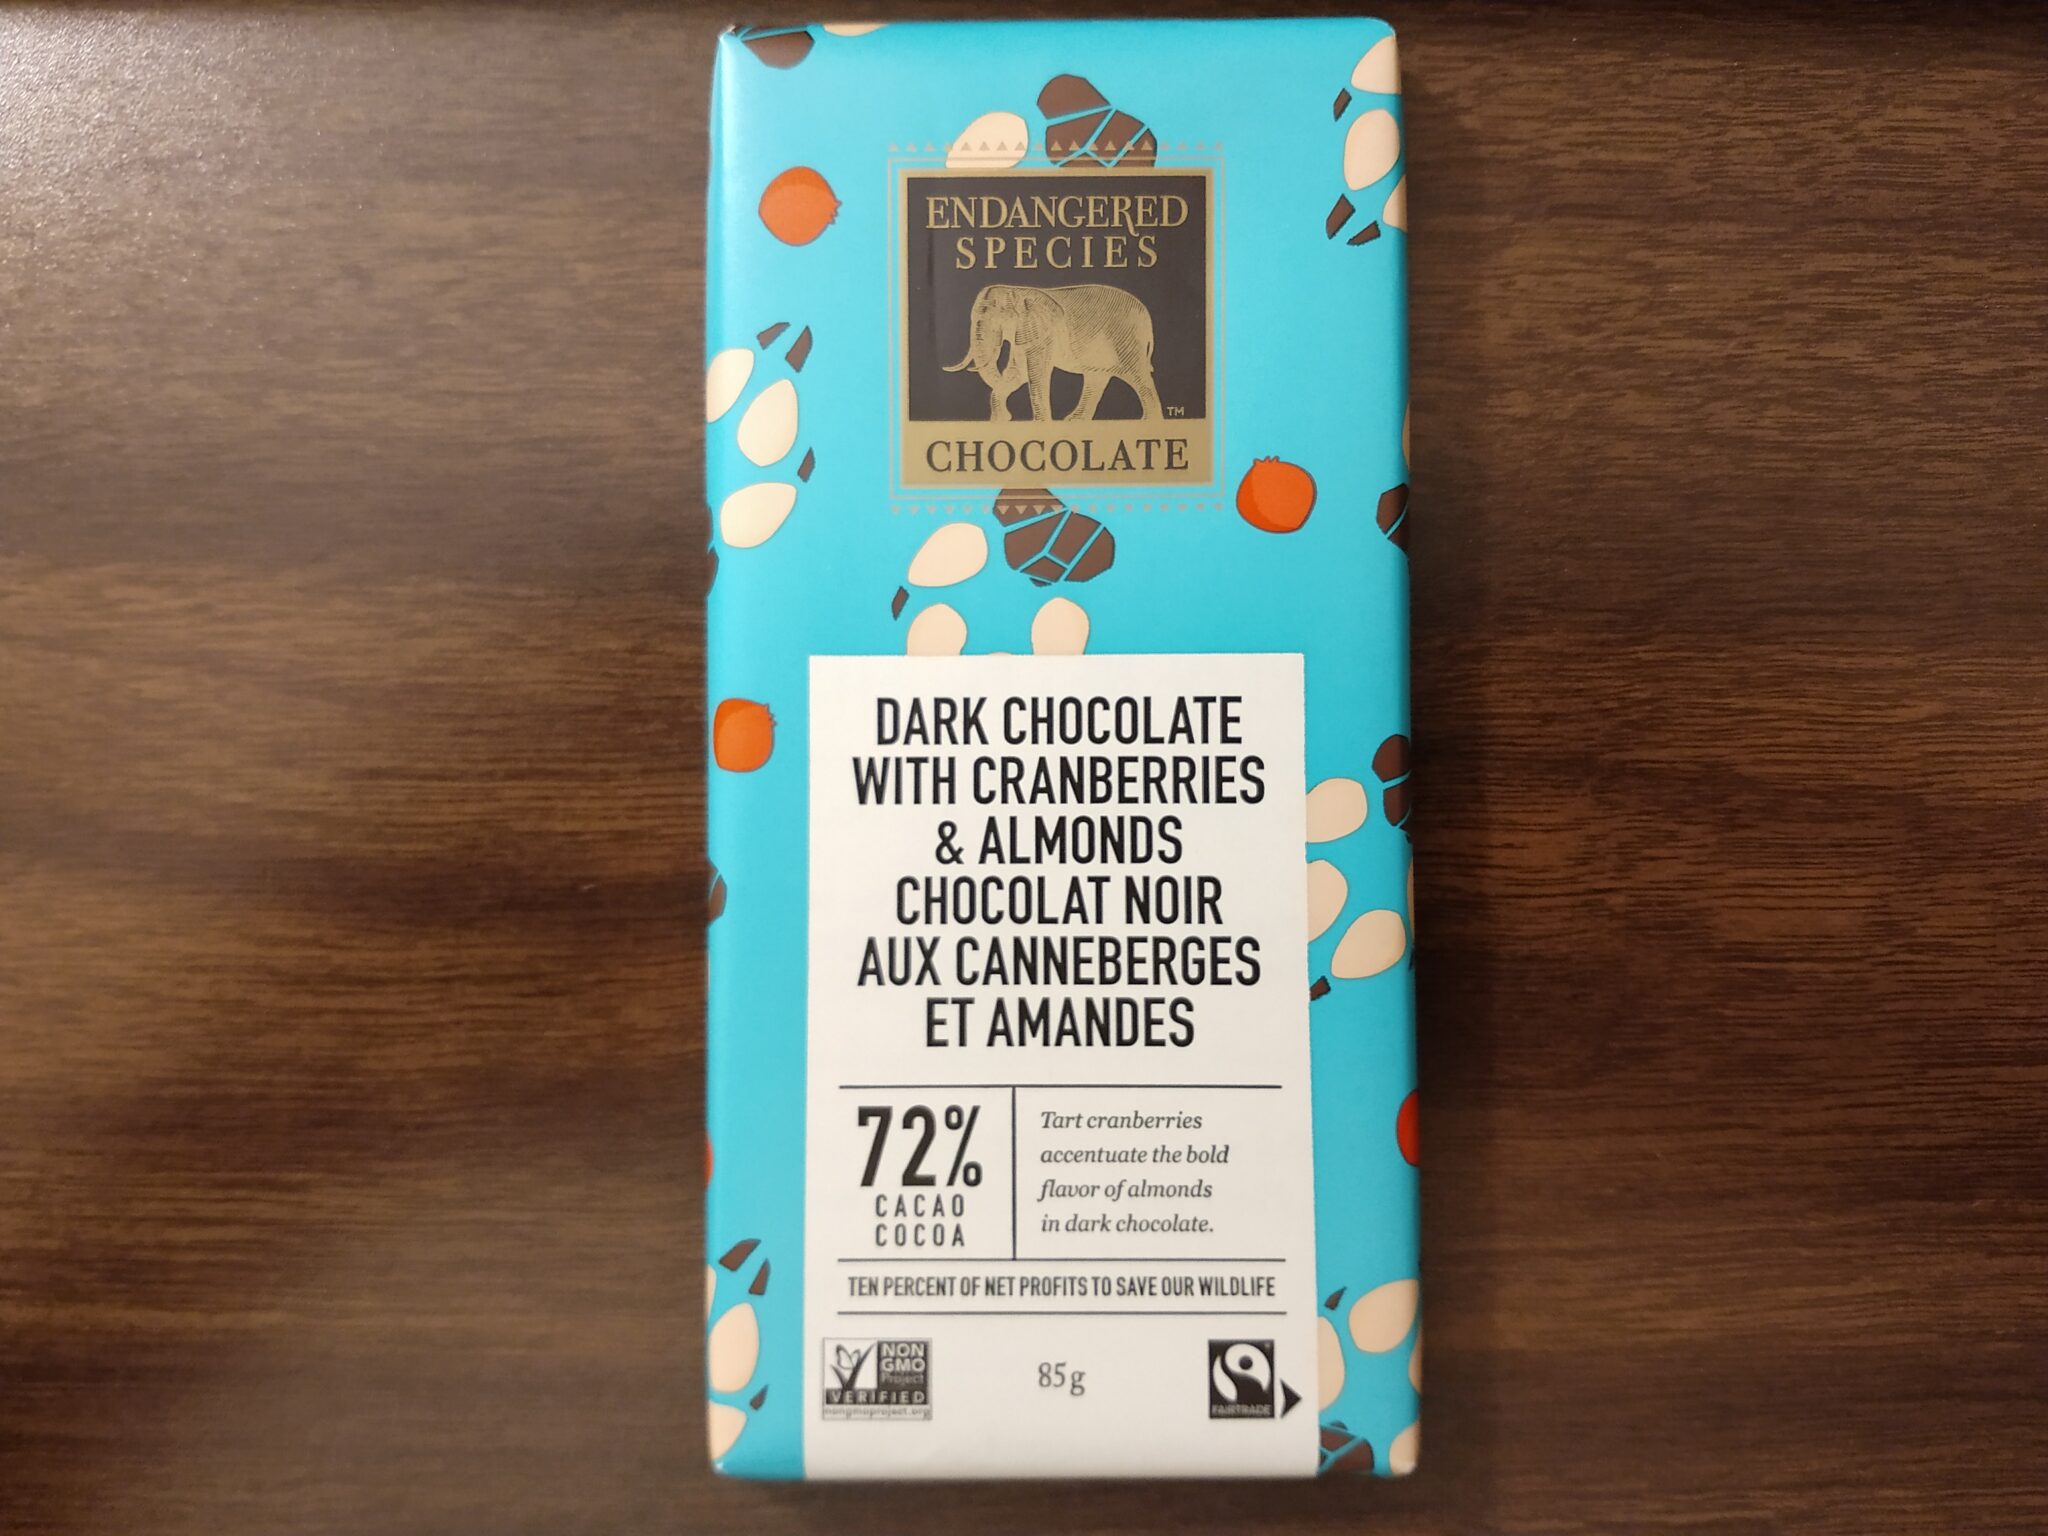 Endangered Species Chocolate – Cranberries, Almonds and 72% Dark Chocolate